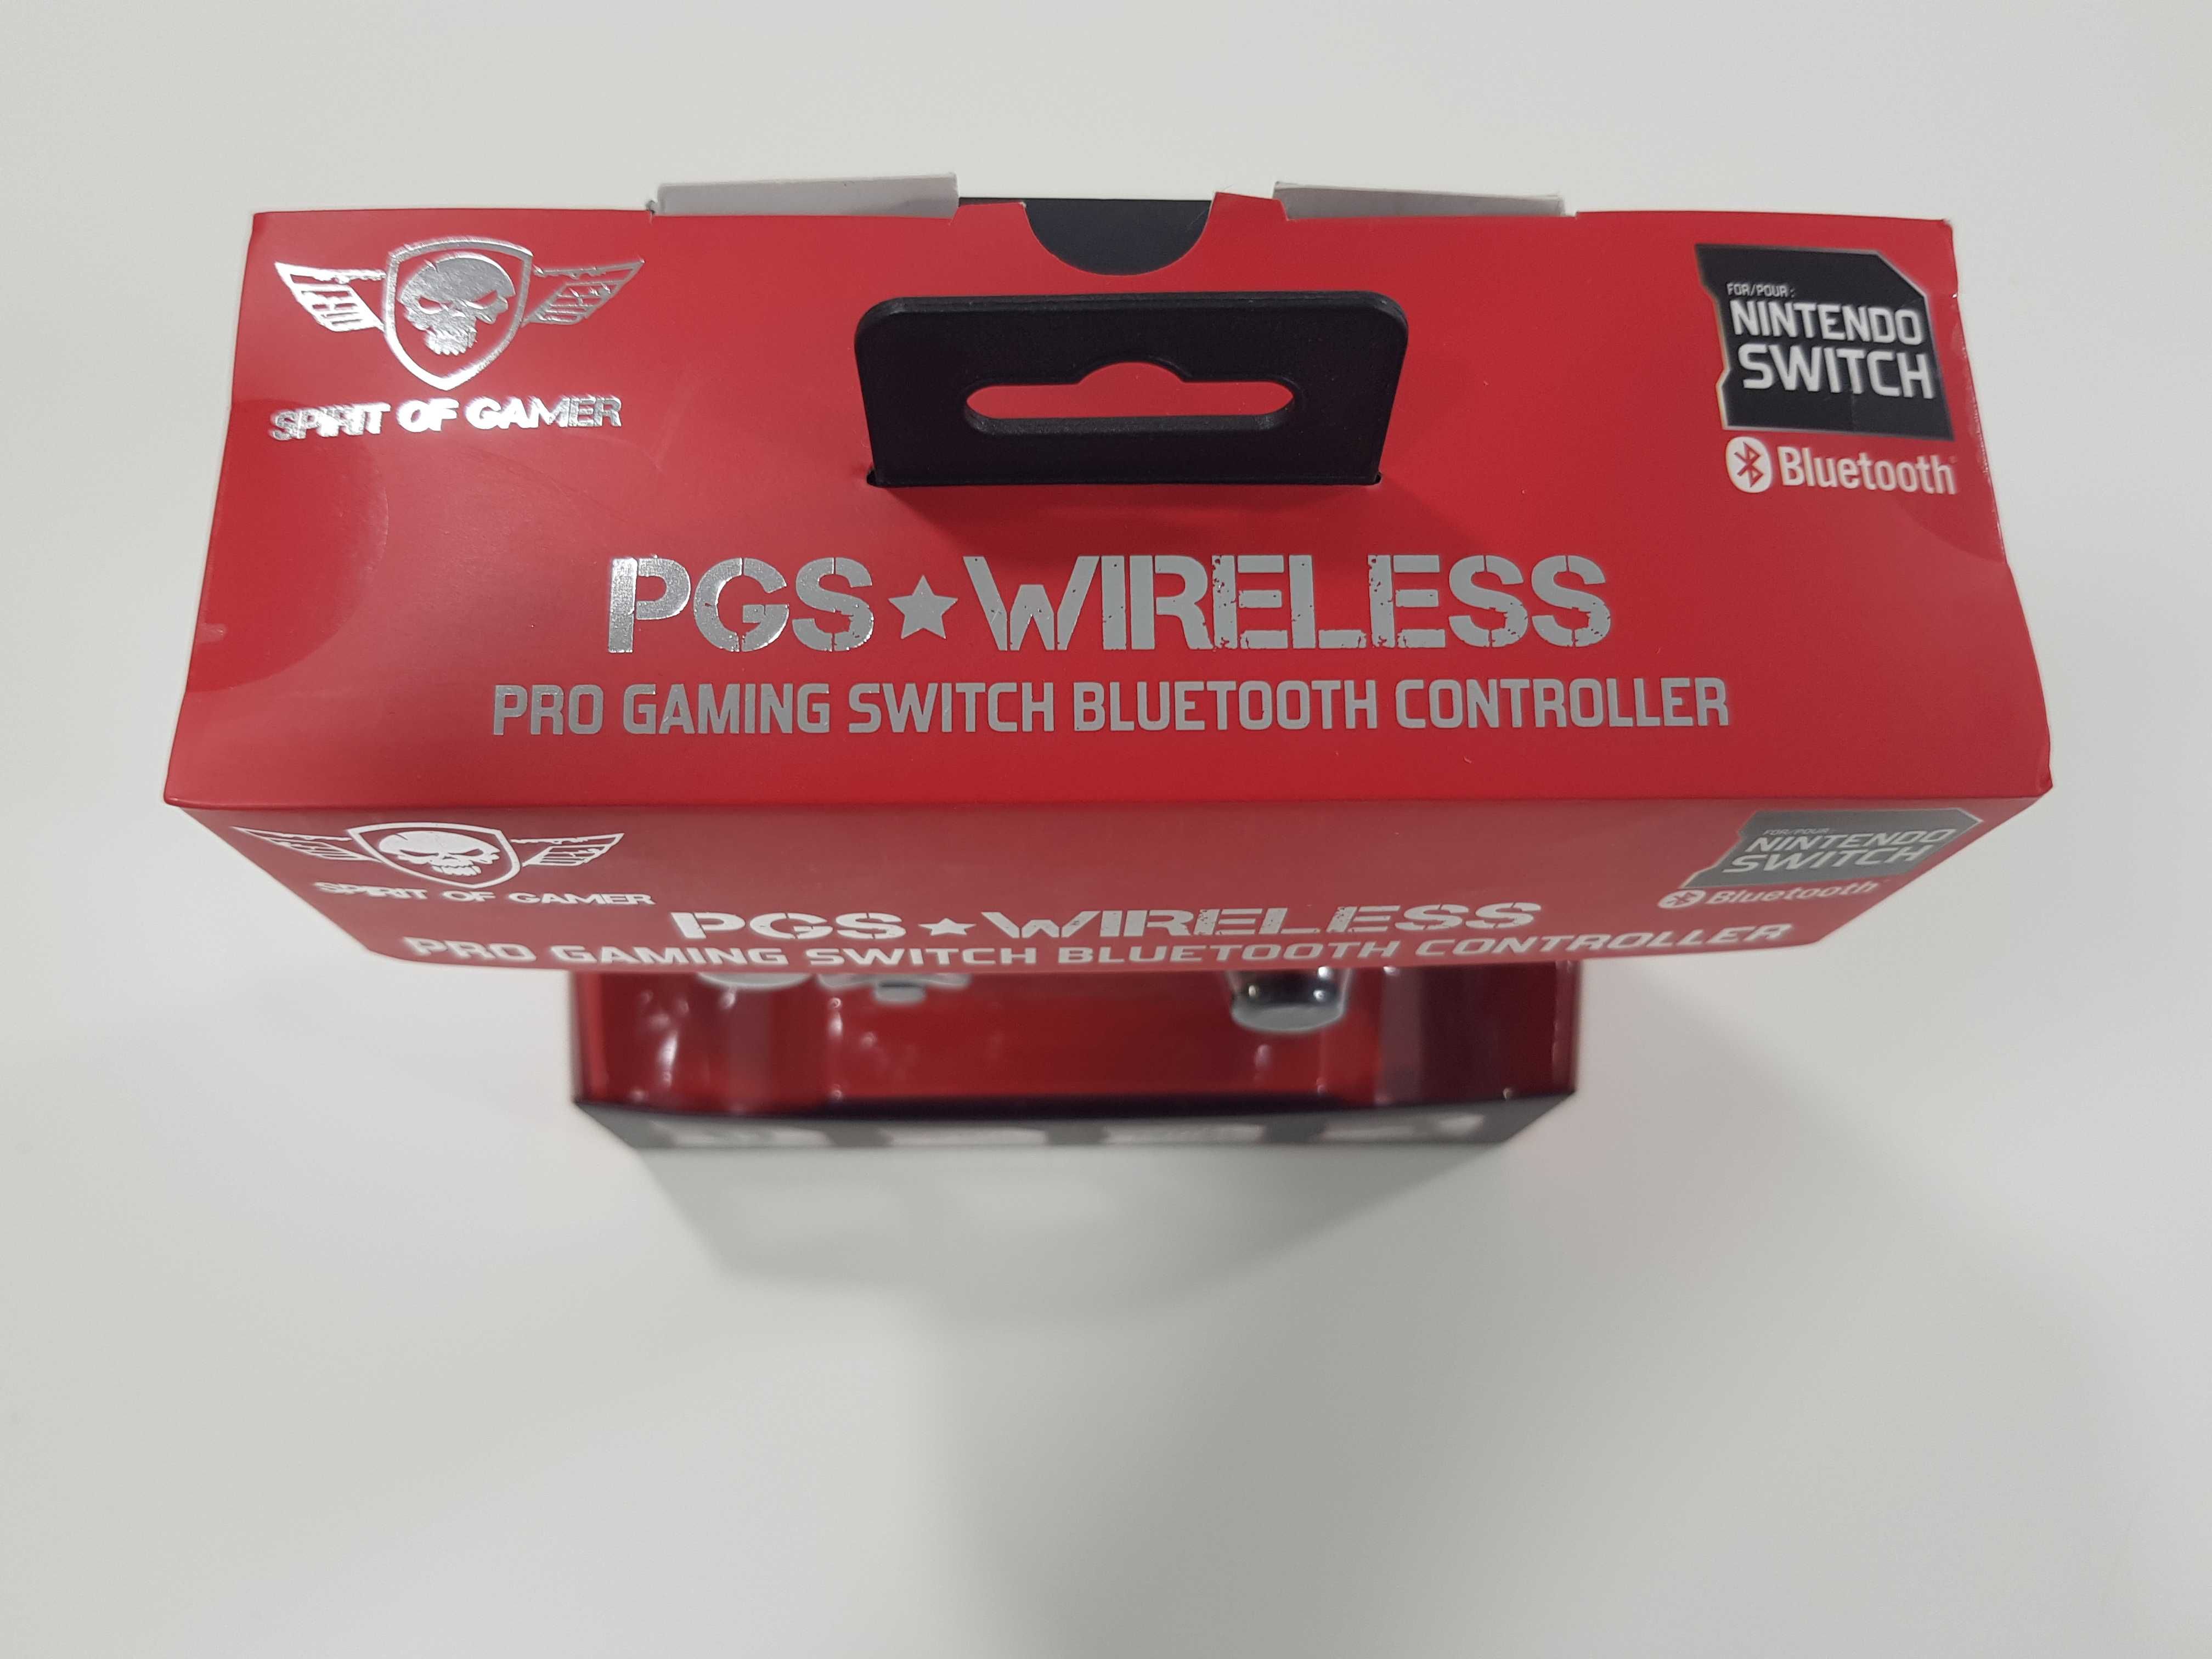 Comando Nintendo Switch wireless (Spirit of Gamer)